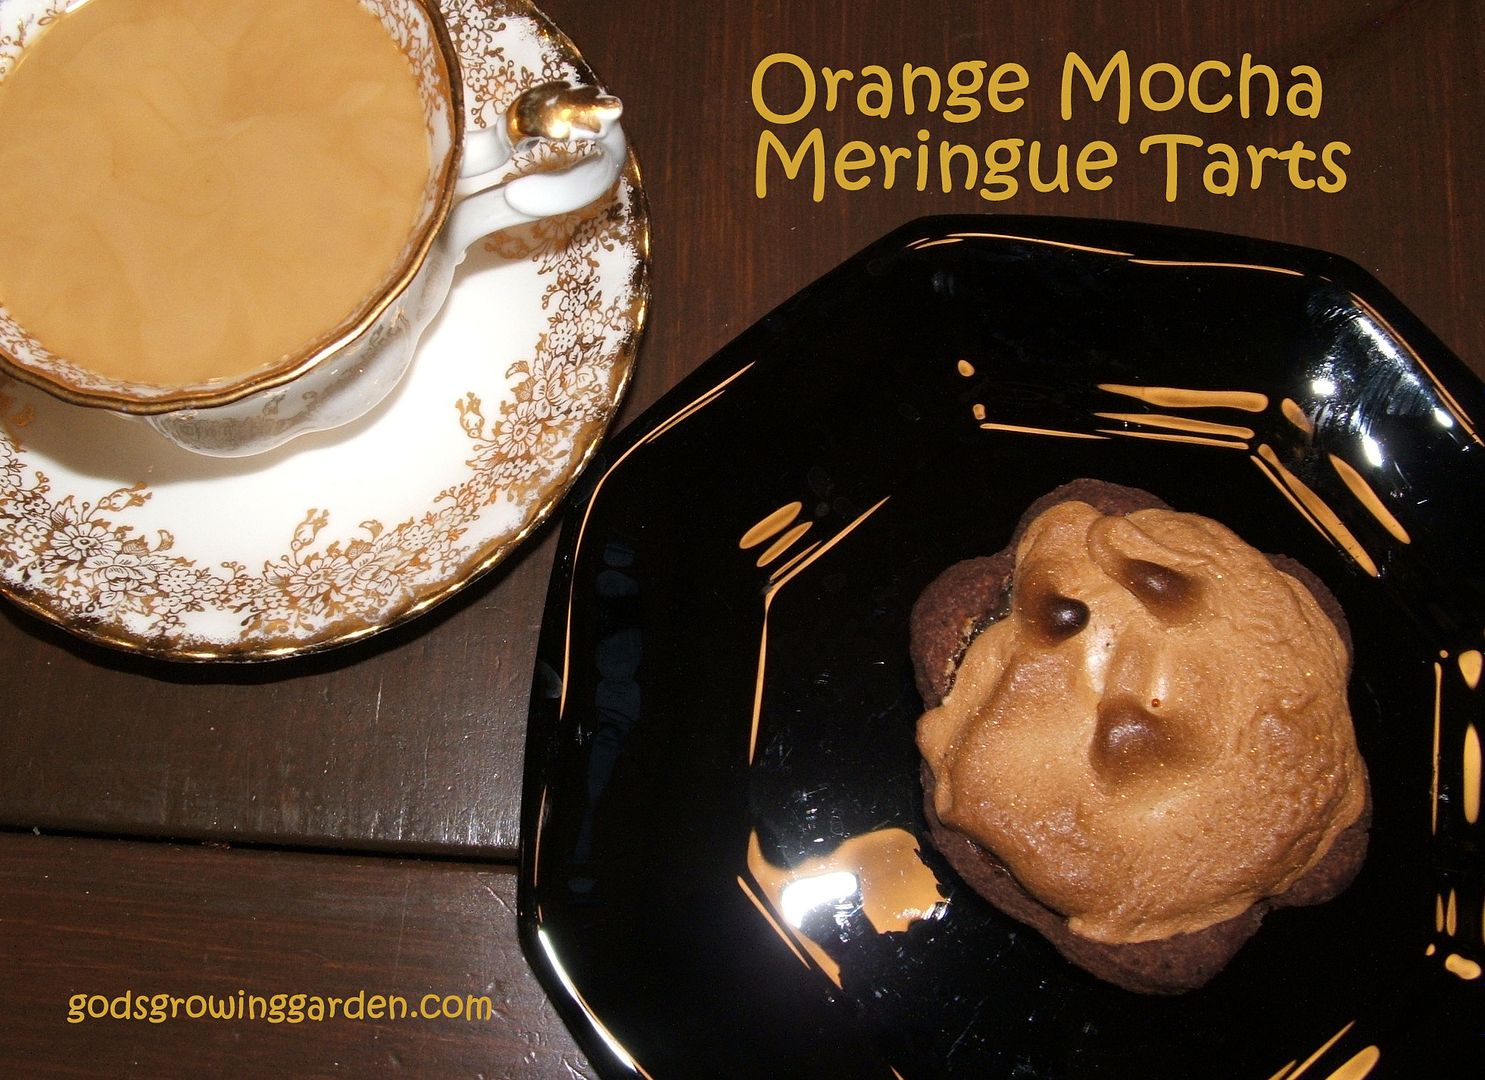 Orange Mocha Meringue Tarts, by Angie Ouellette-Towergodsgrowinggarden.com